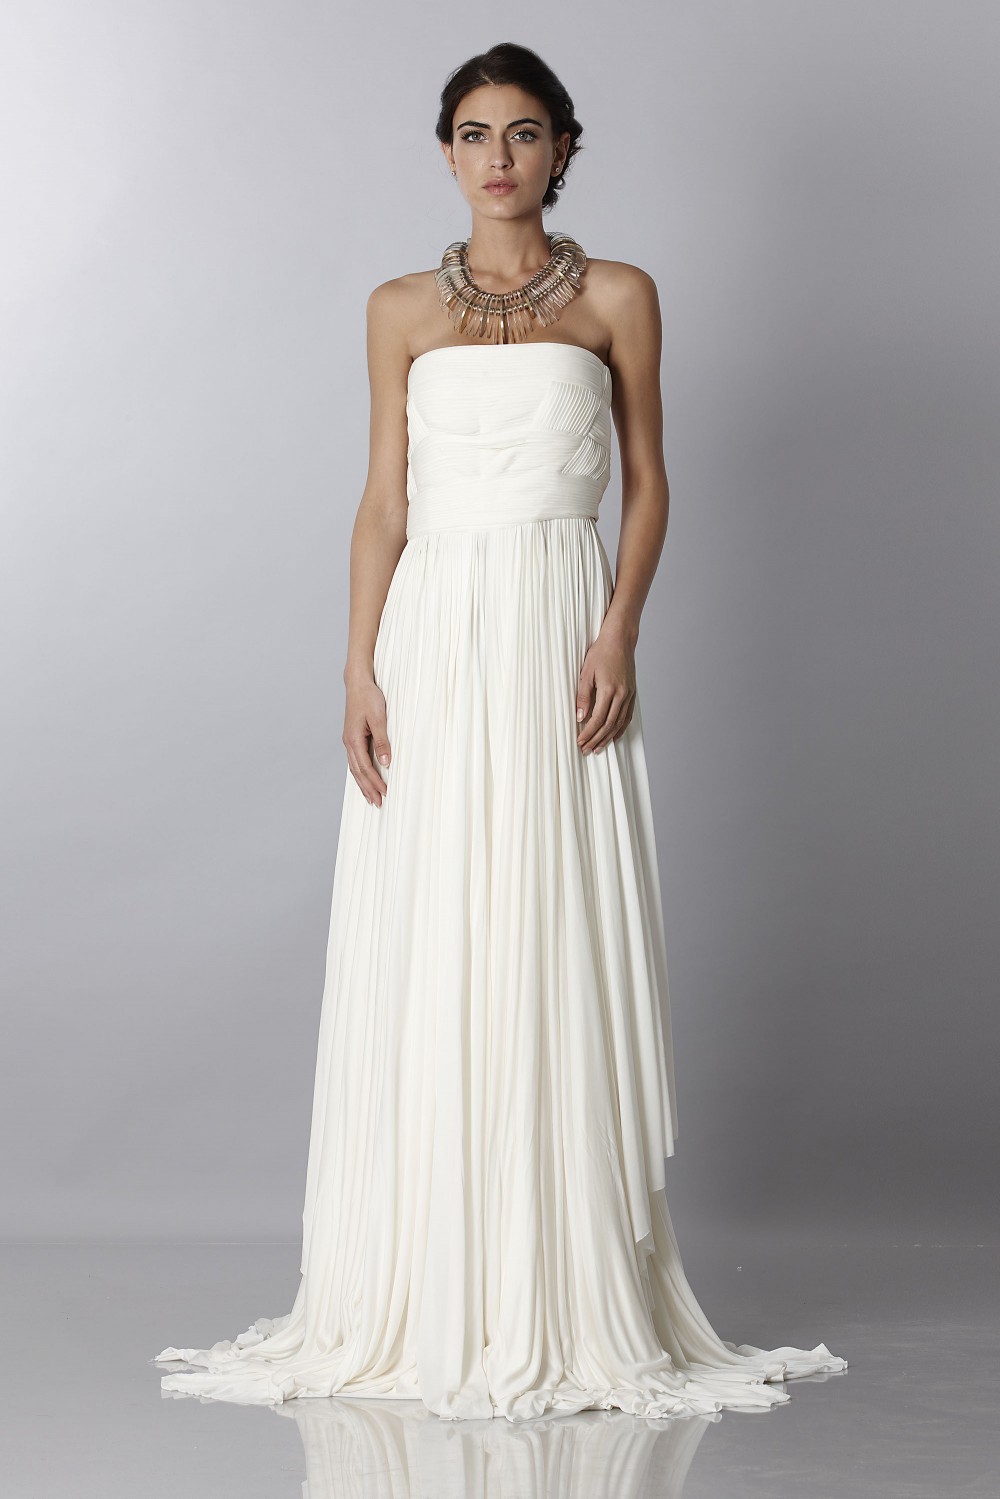 Noleggio Abbigliamento Firmato - White dress - Vionnet - Drexcode -2